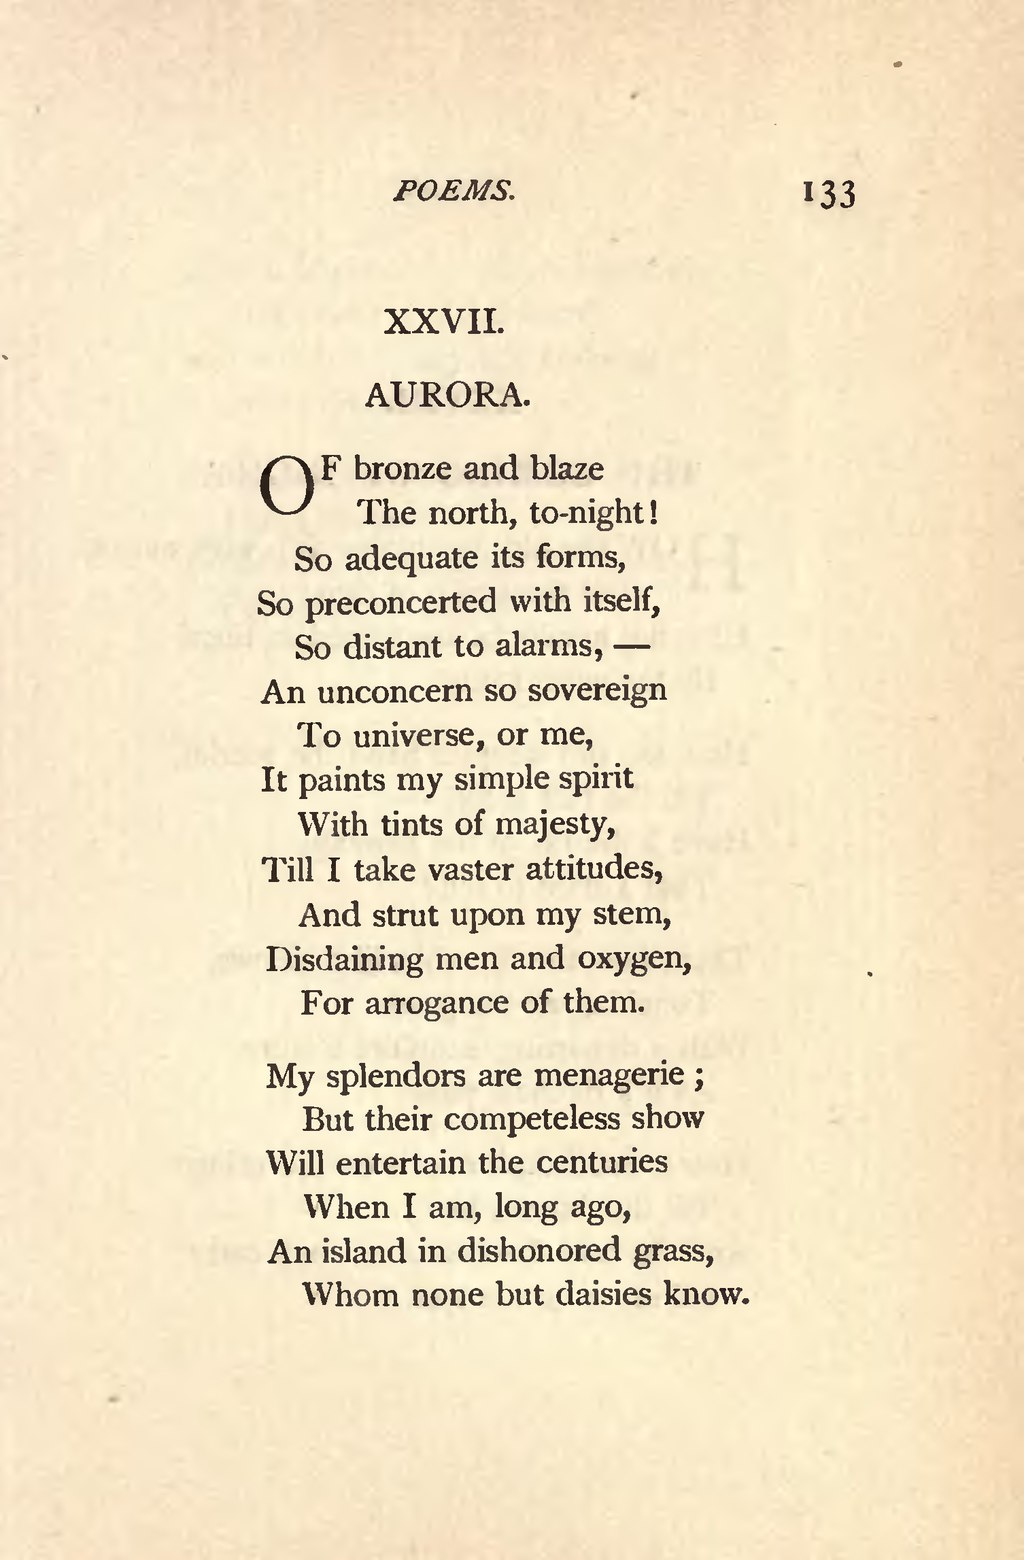 emily dickinson longest poem